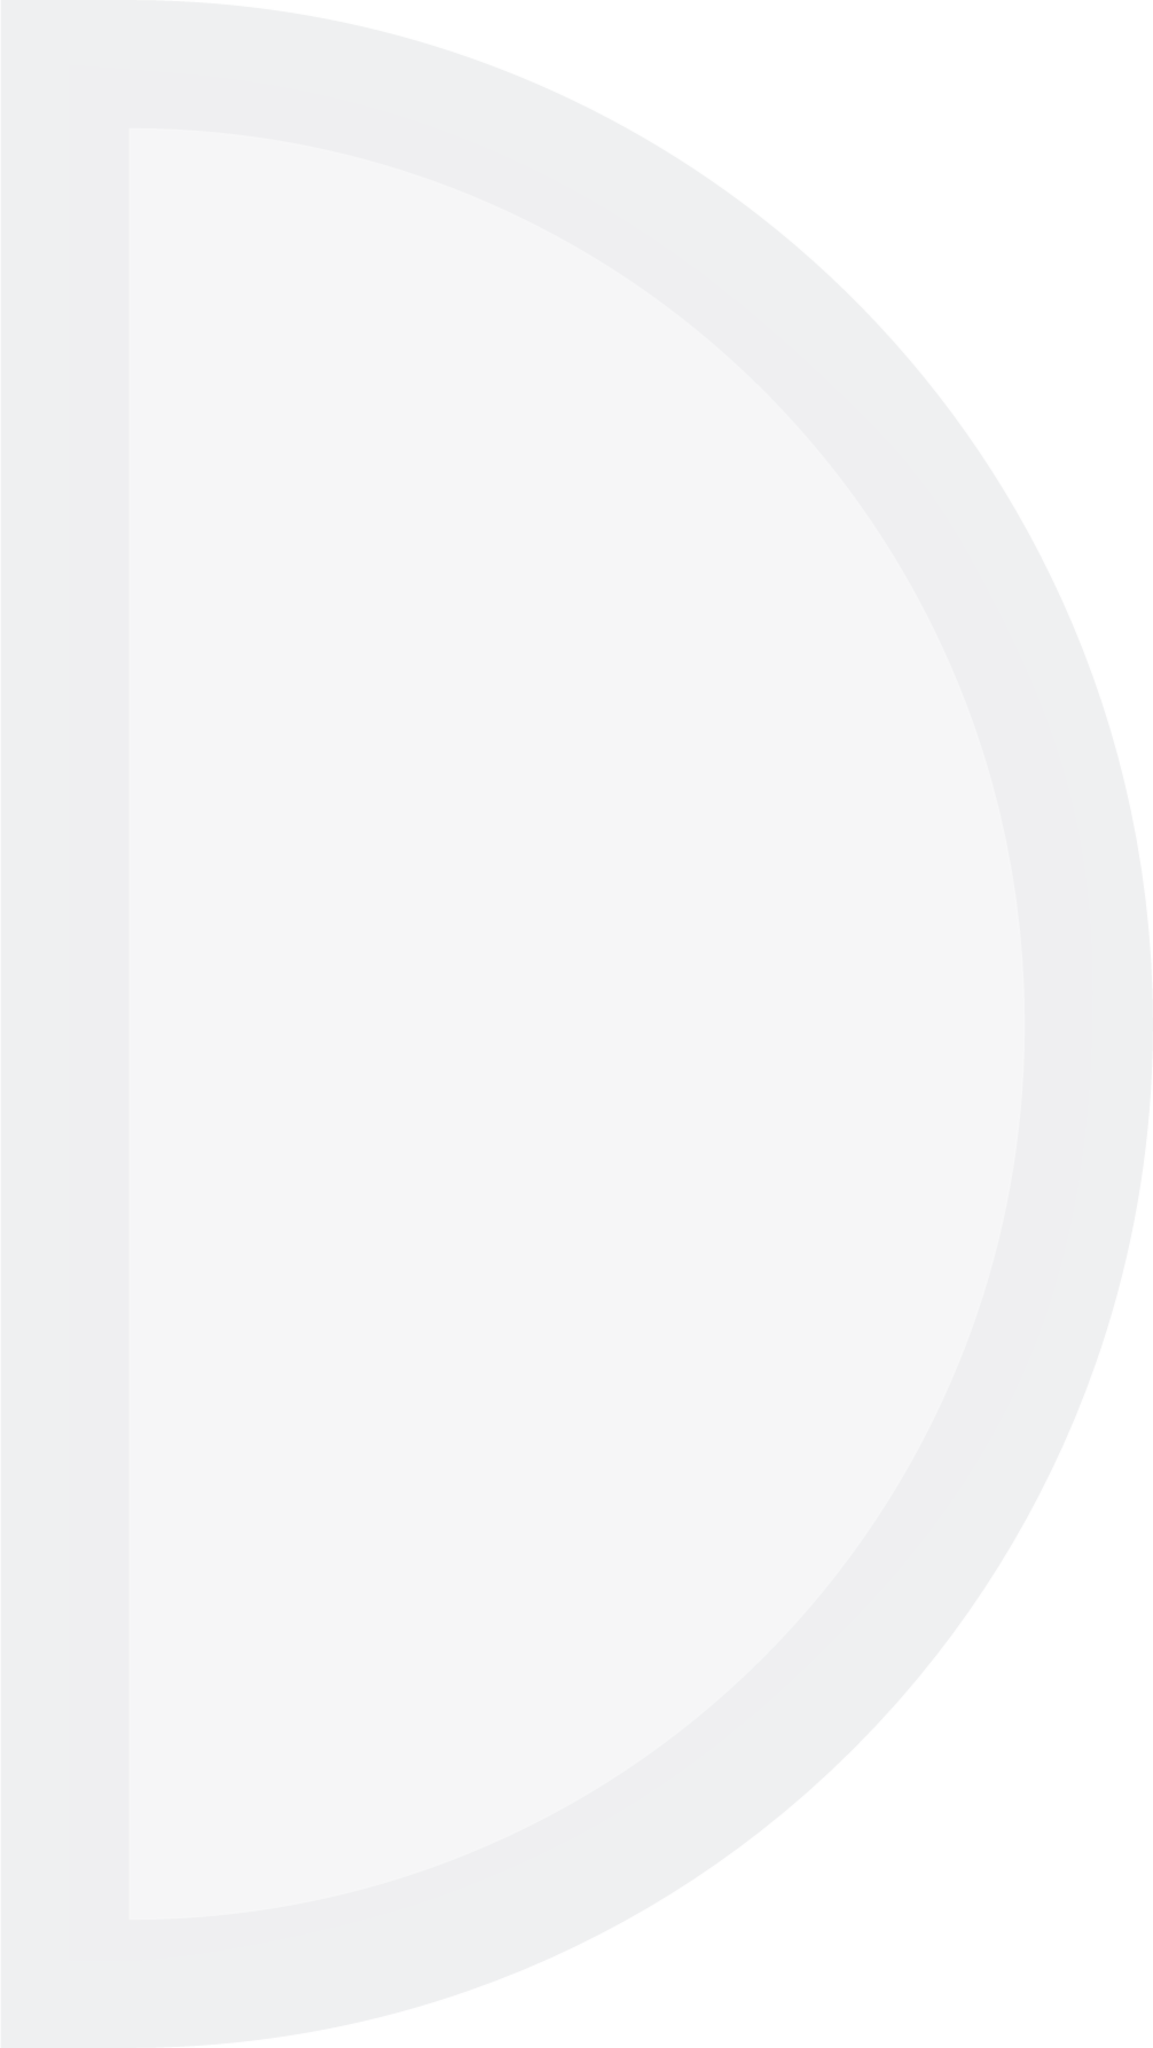 draw halfcircle2 icon